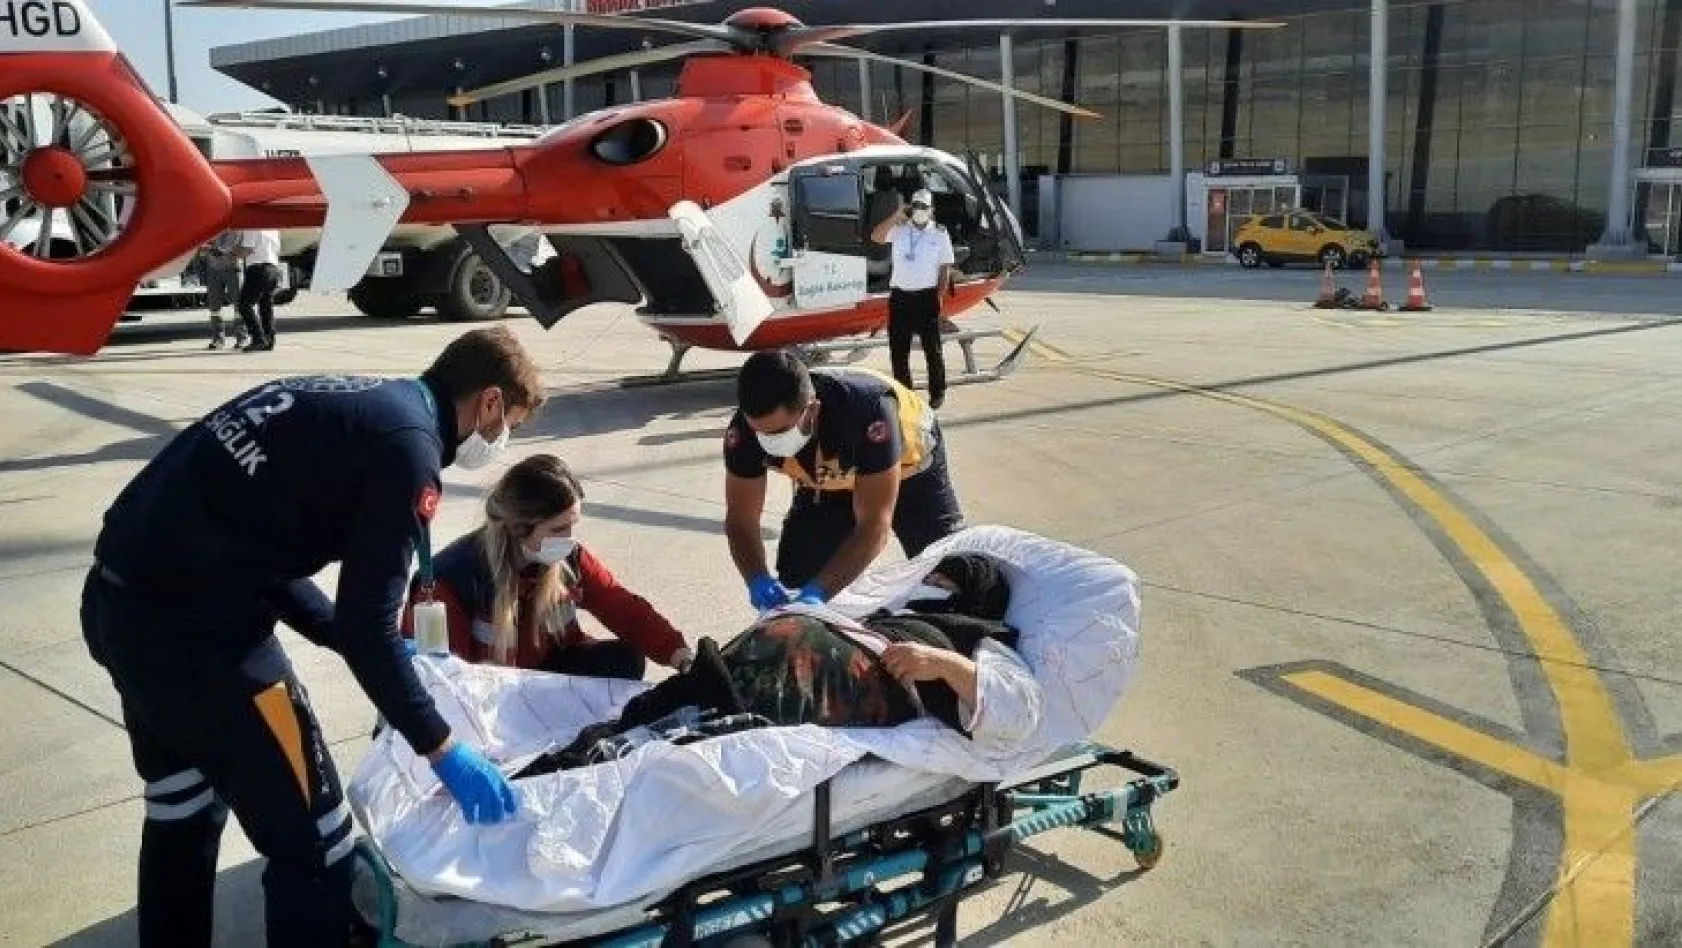 Hasta, ambulans helikopterle sevk edildi